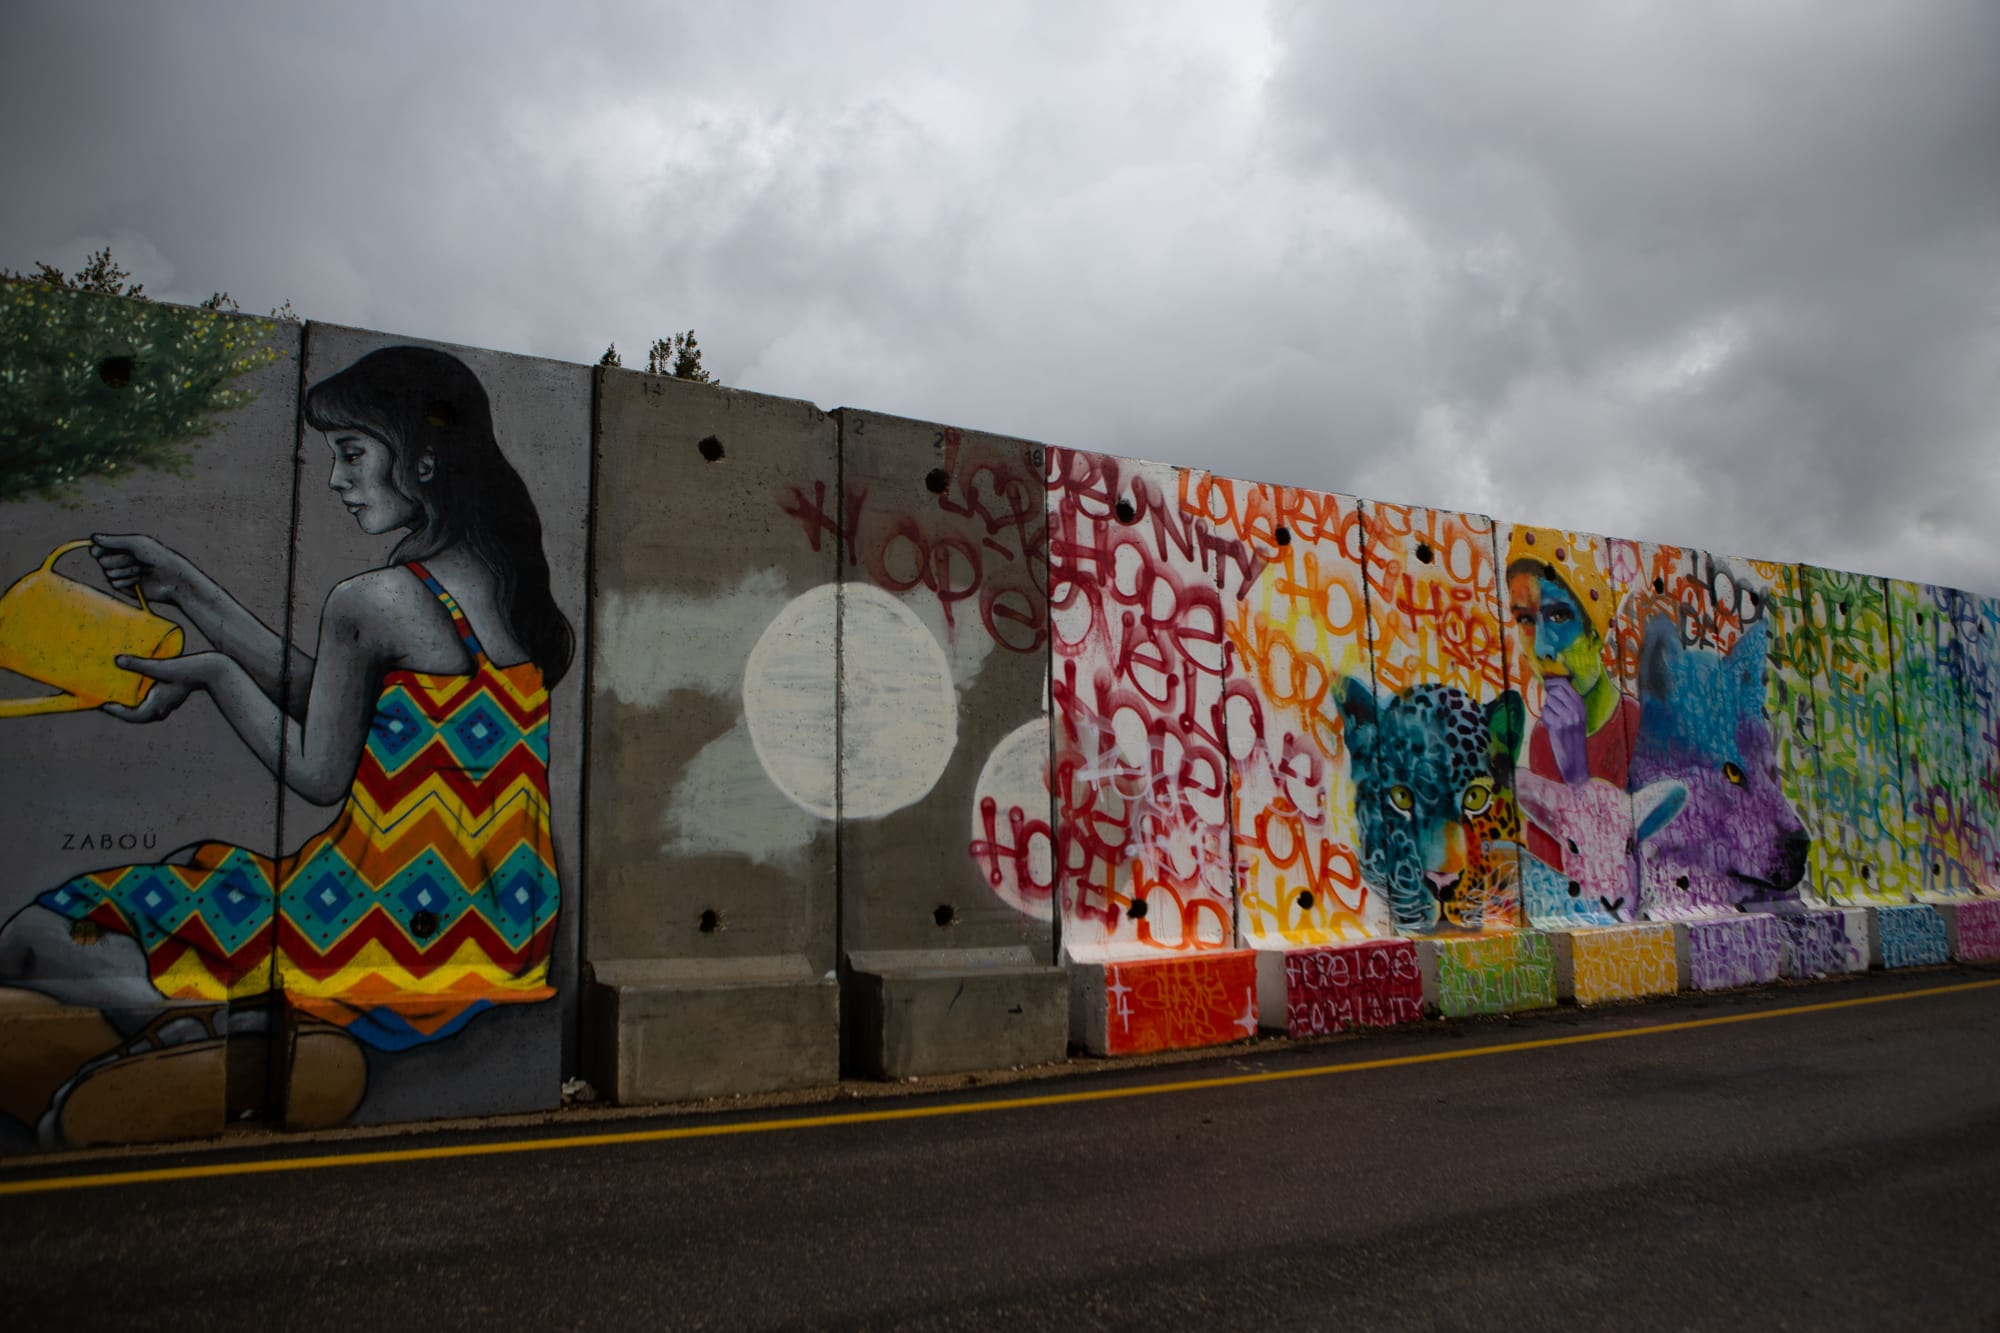 &quot;קירות מדברים&quot; &#8211; ציורי גראפיטי על הגבול עם לבנון בכניסה למושב שתולה (צילום: דפנה טלמון)